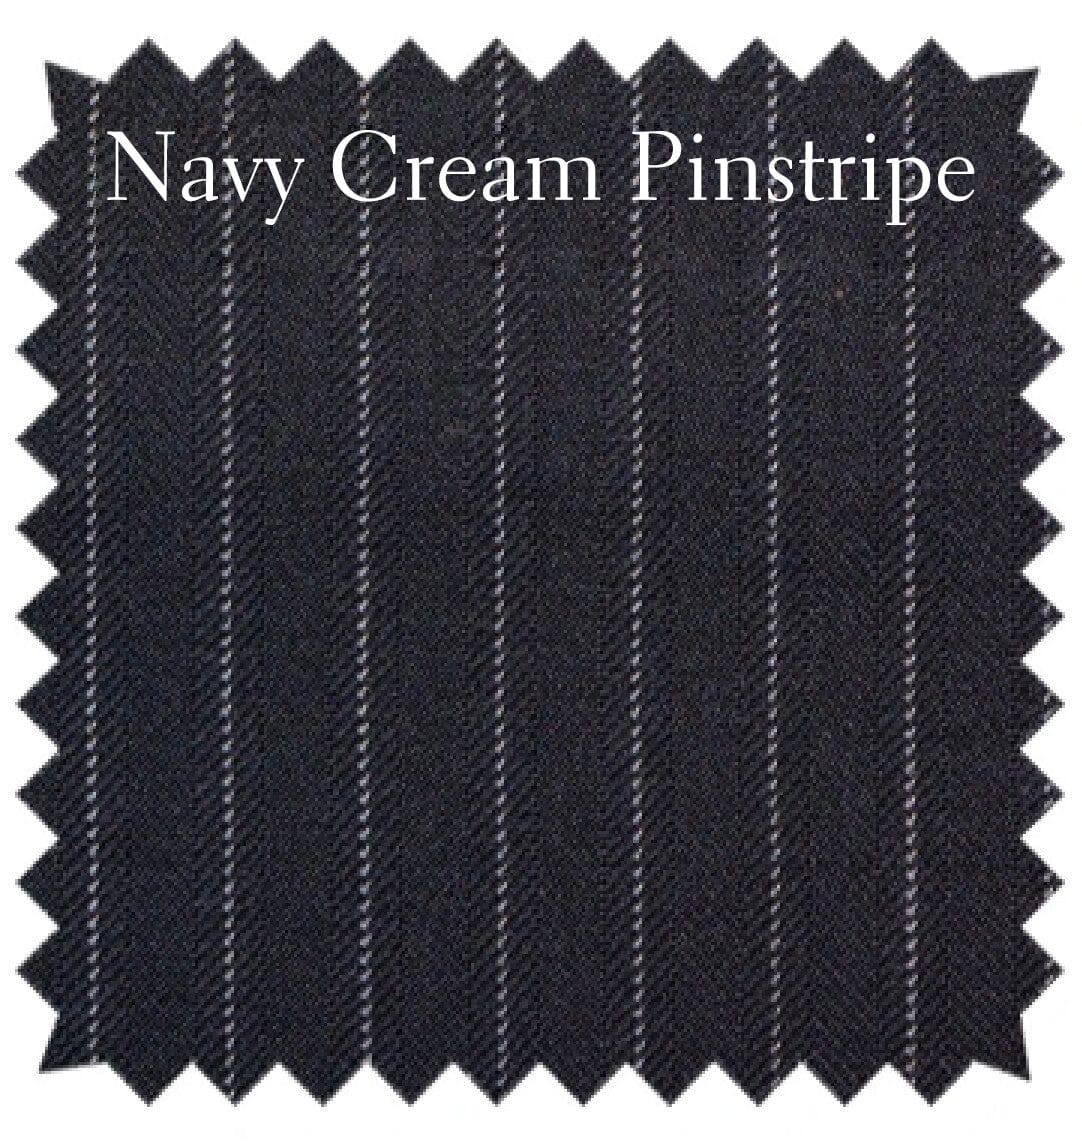 Navy Cream Pinstripe.jpg